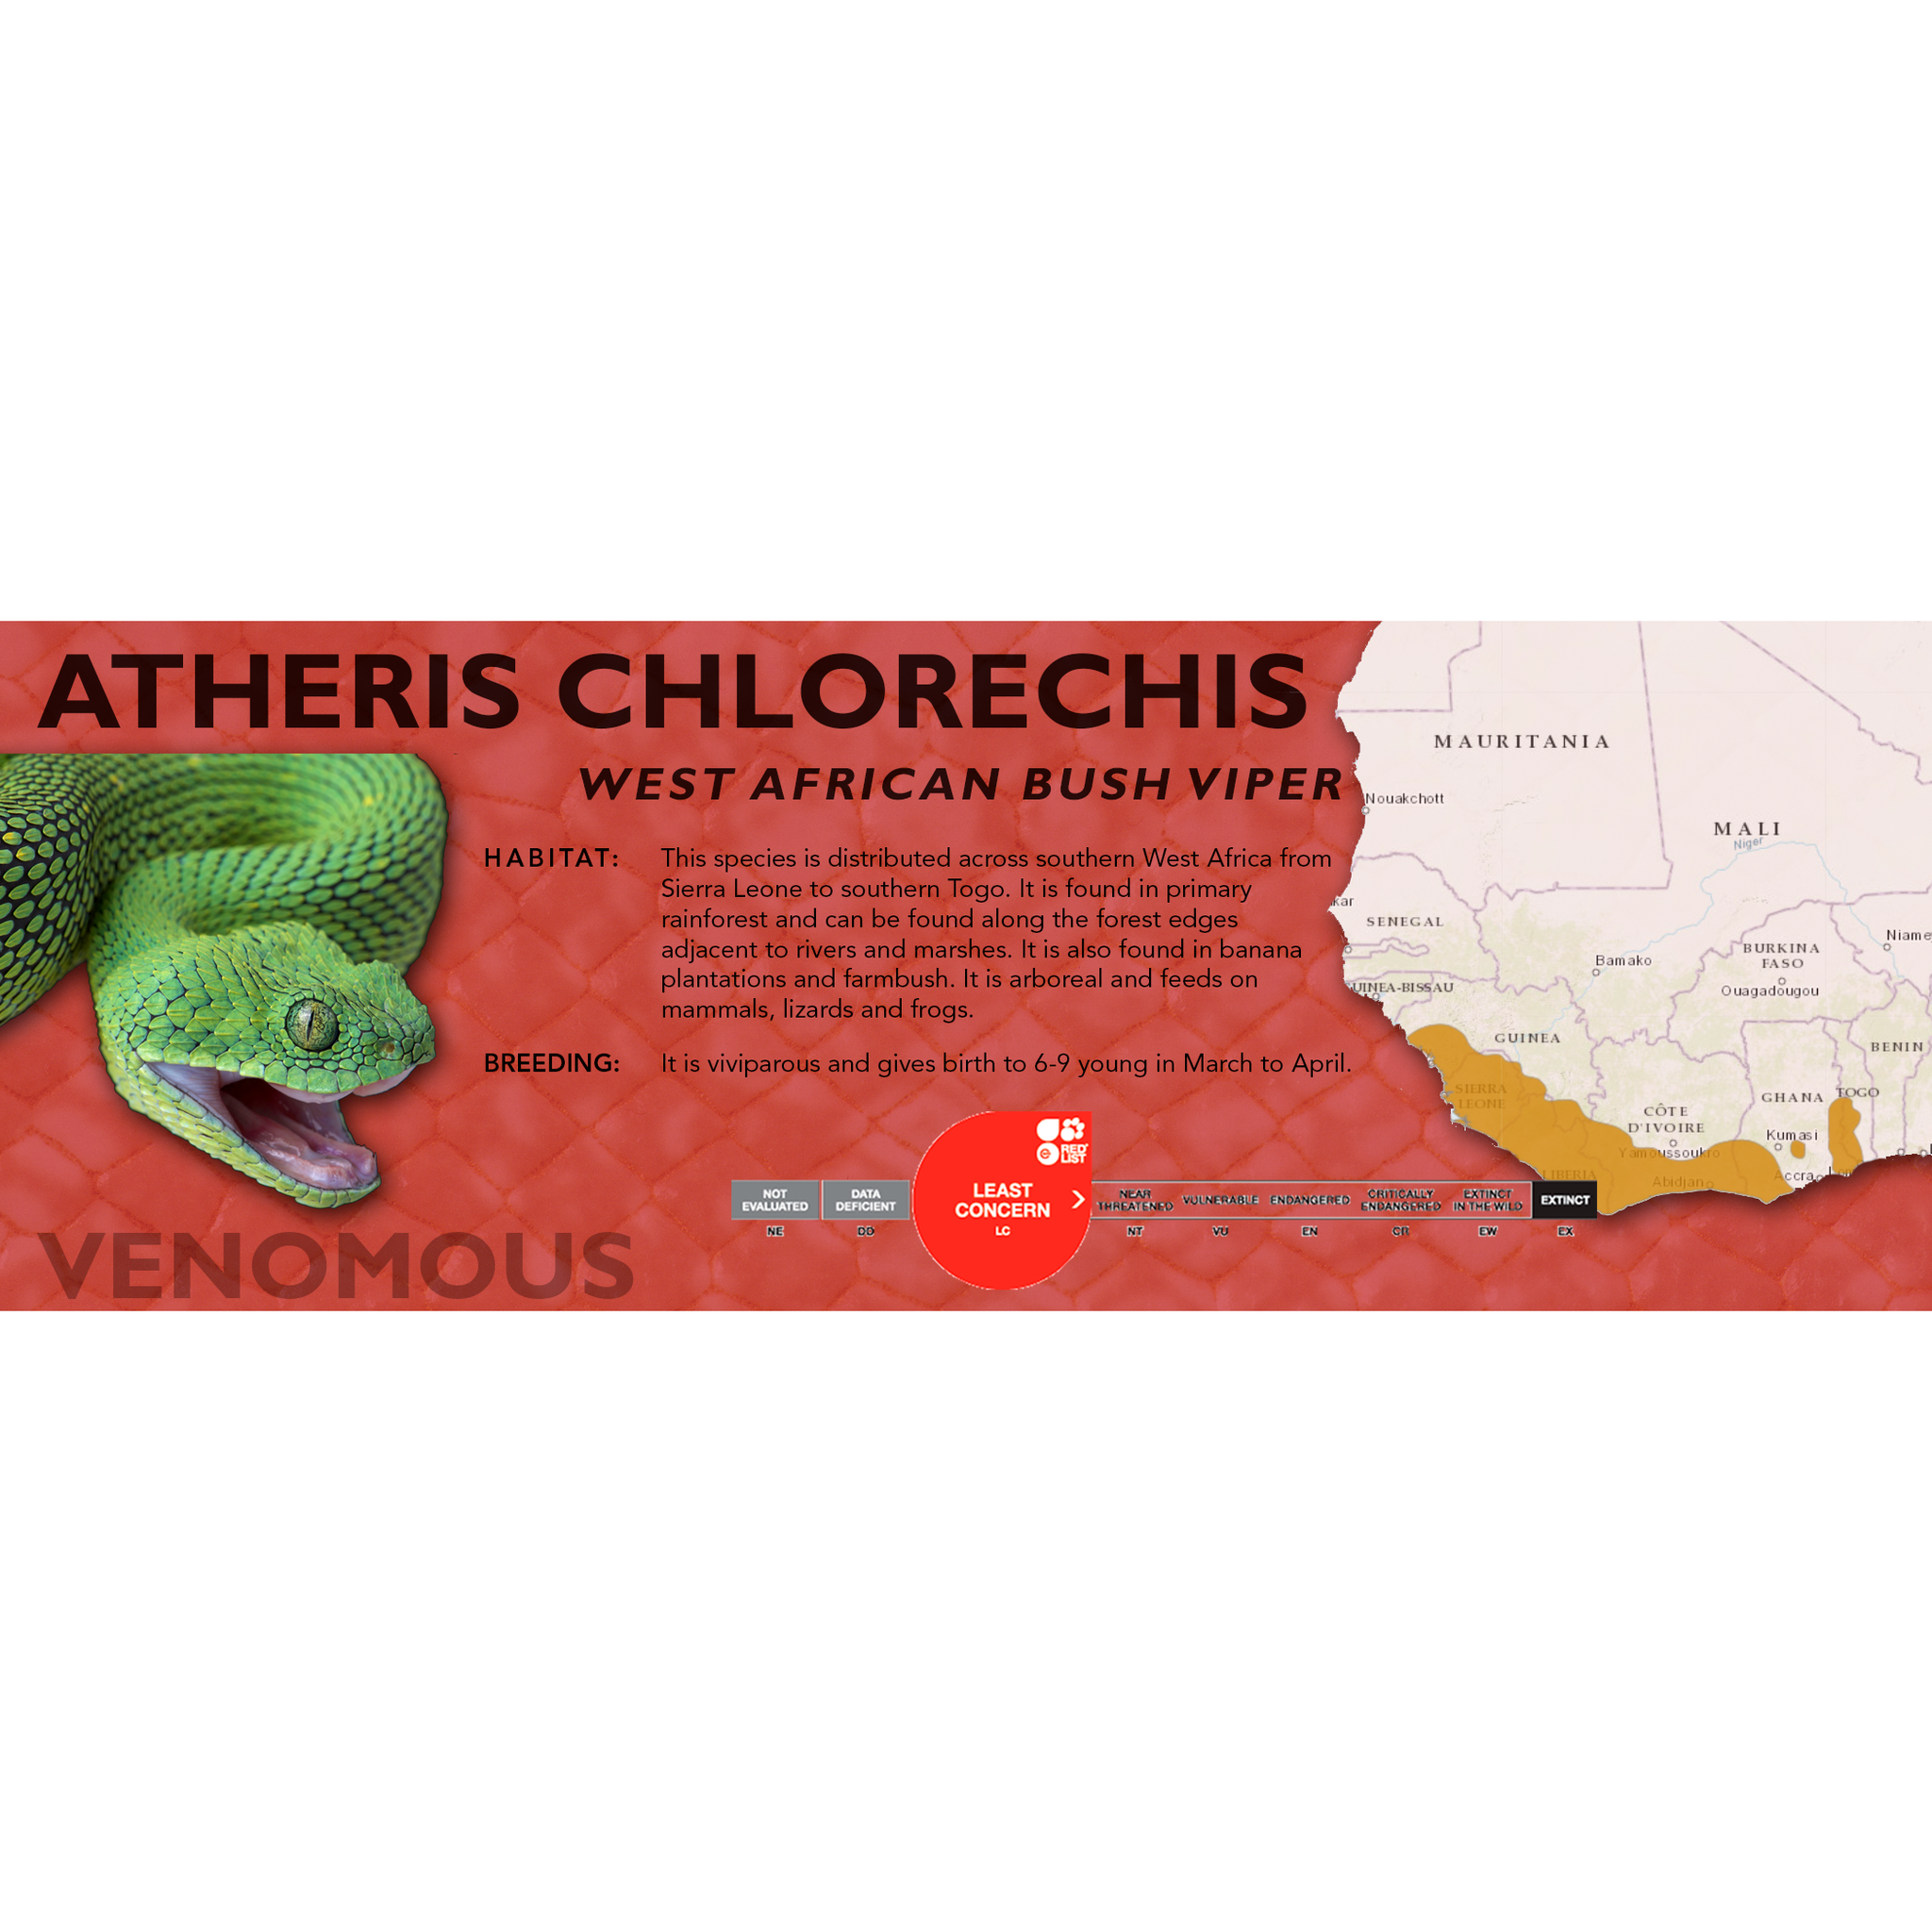 Atheris chlorechis (Green Bush Viper)